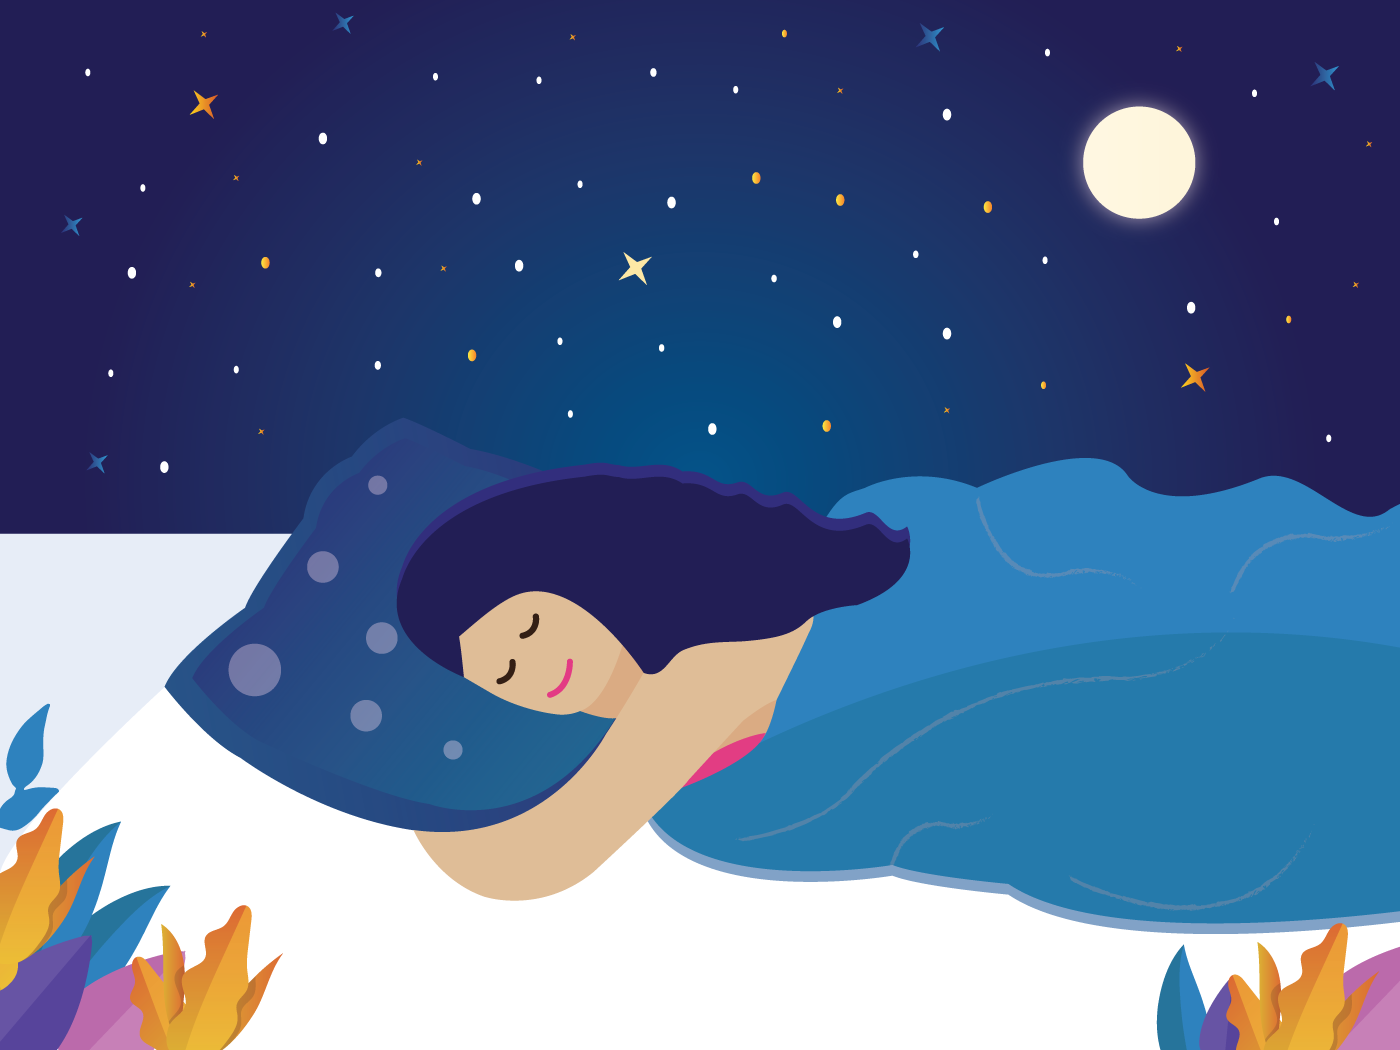 How to fall asleep when your mind is busy
Deep sleep meditation